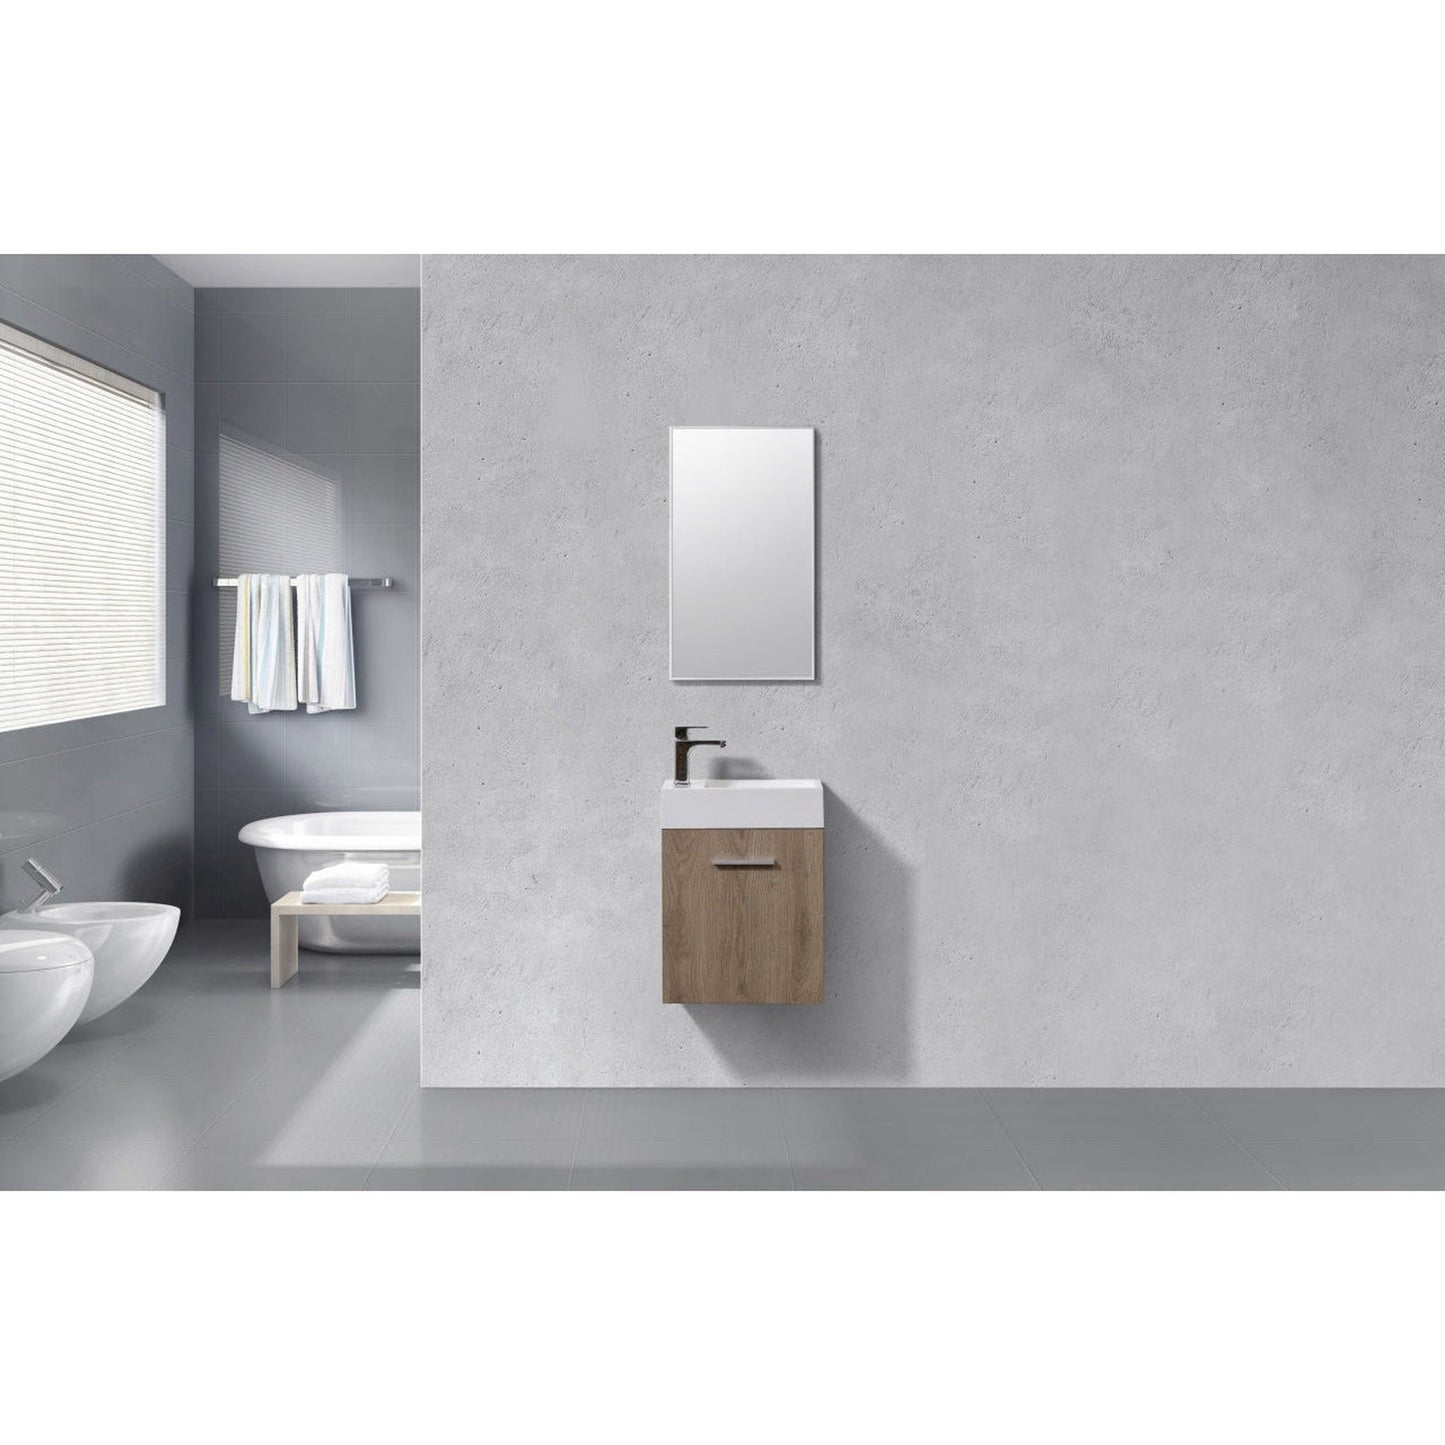 KubeBath Bliss 18" Butternut Wall-Mounted Modern Bathroom Vanity With Single Integrated Acrylic Sink With Overflow